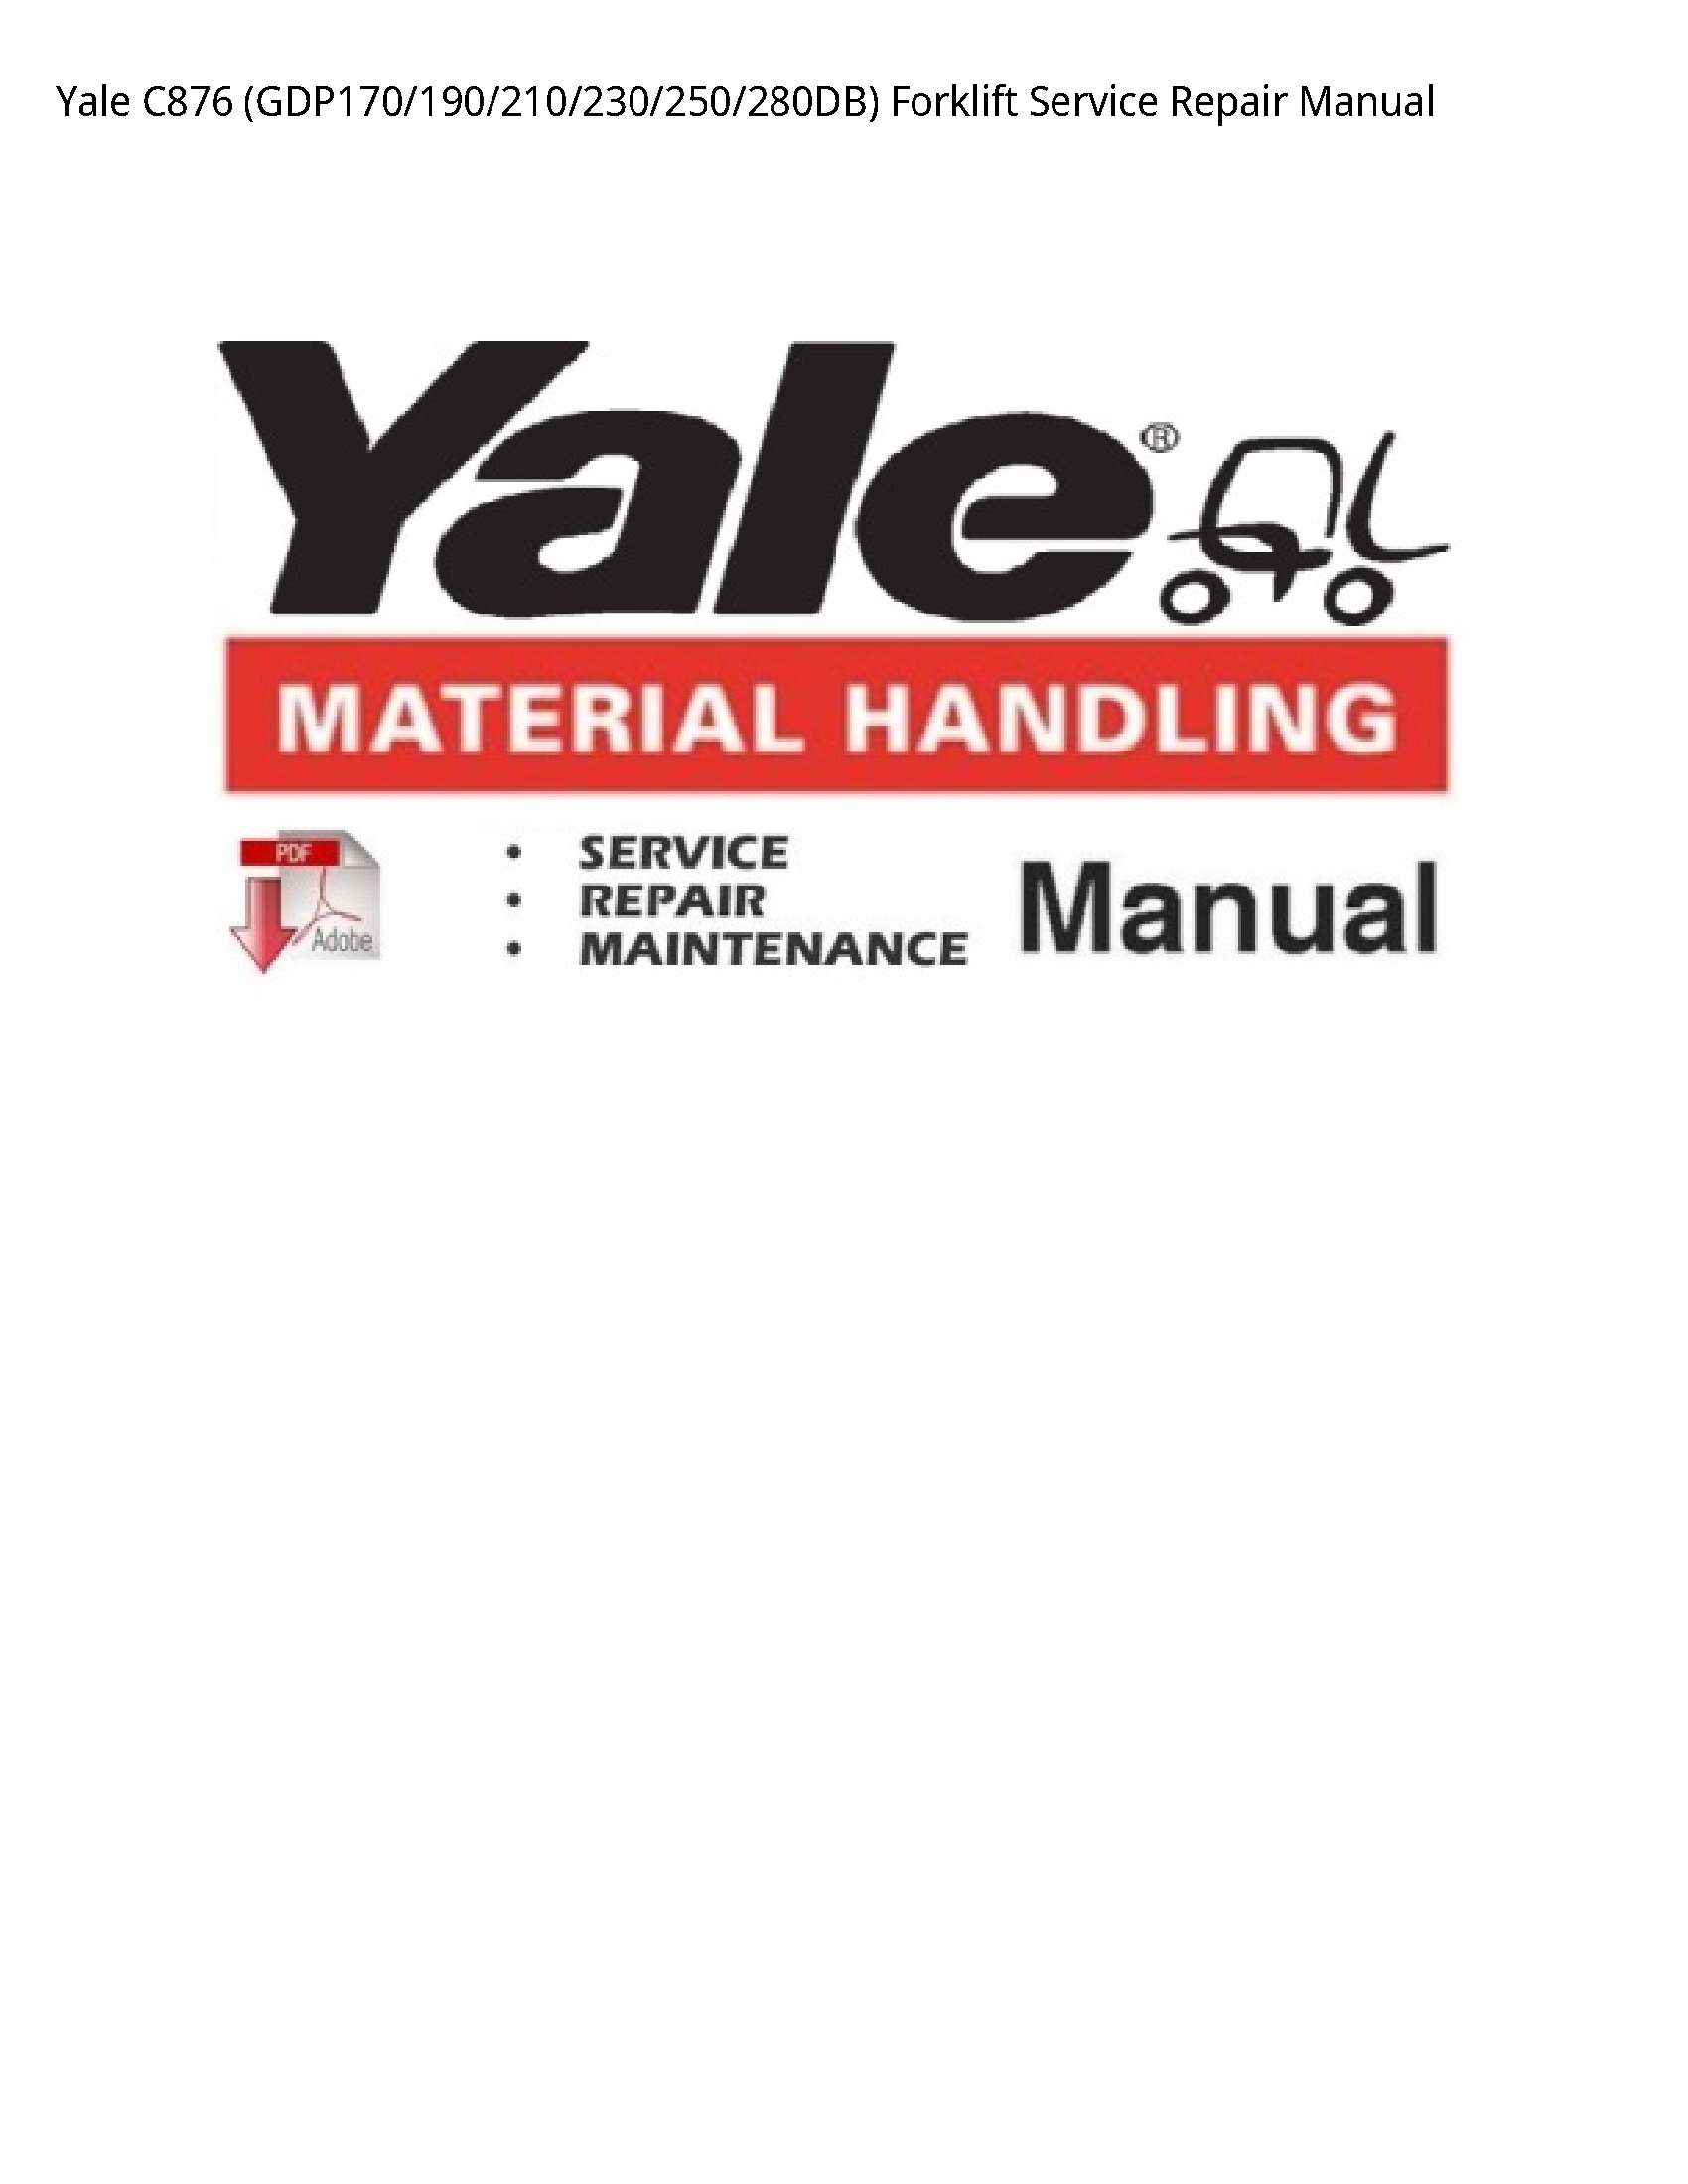 Yale C876 Forklift manual